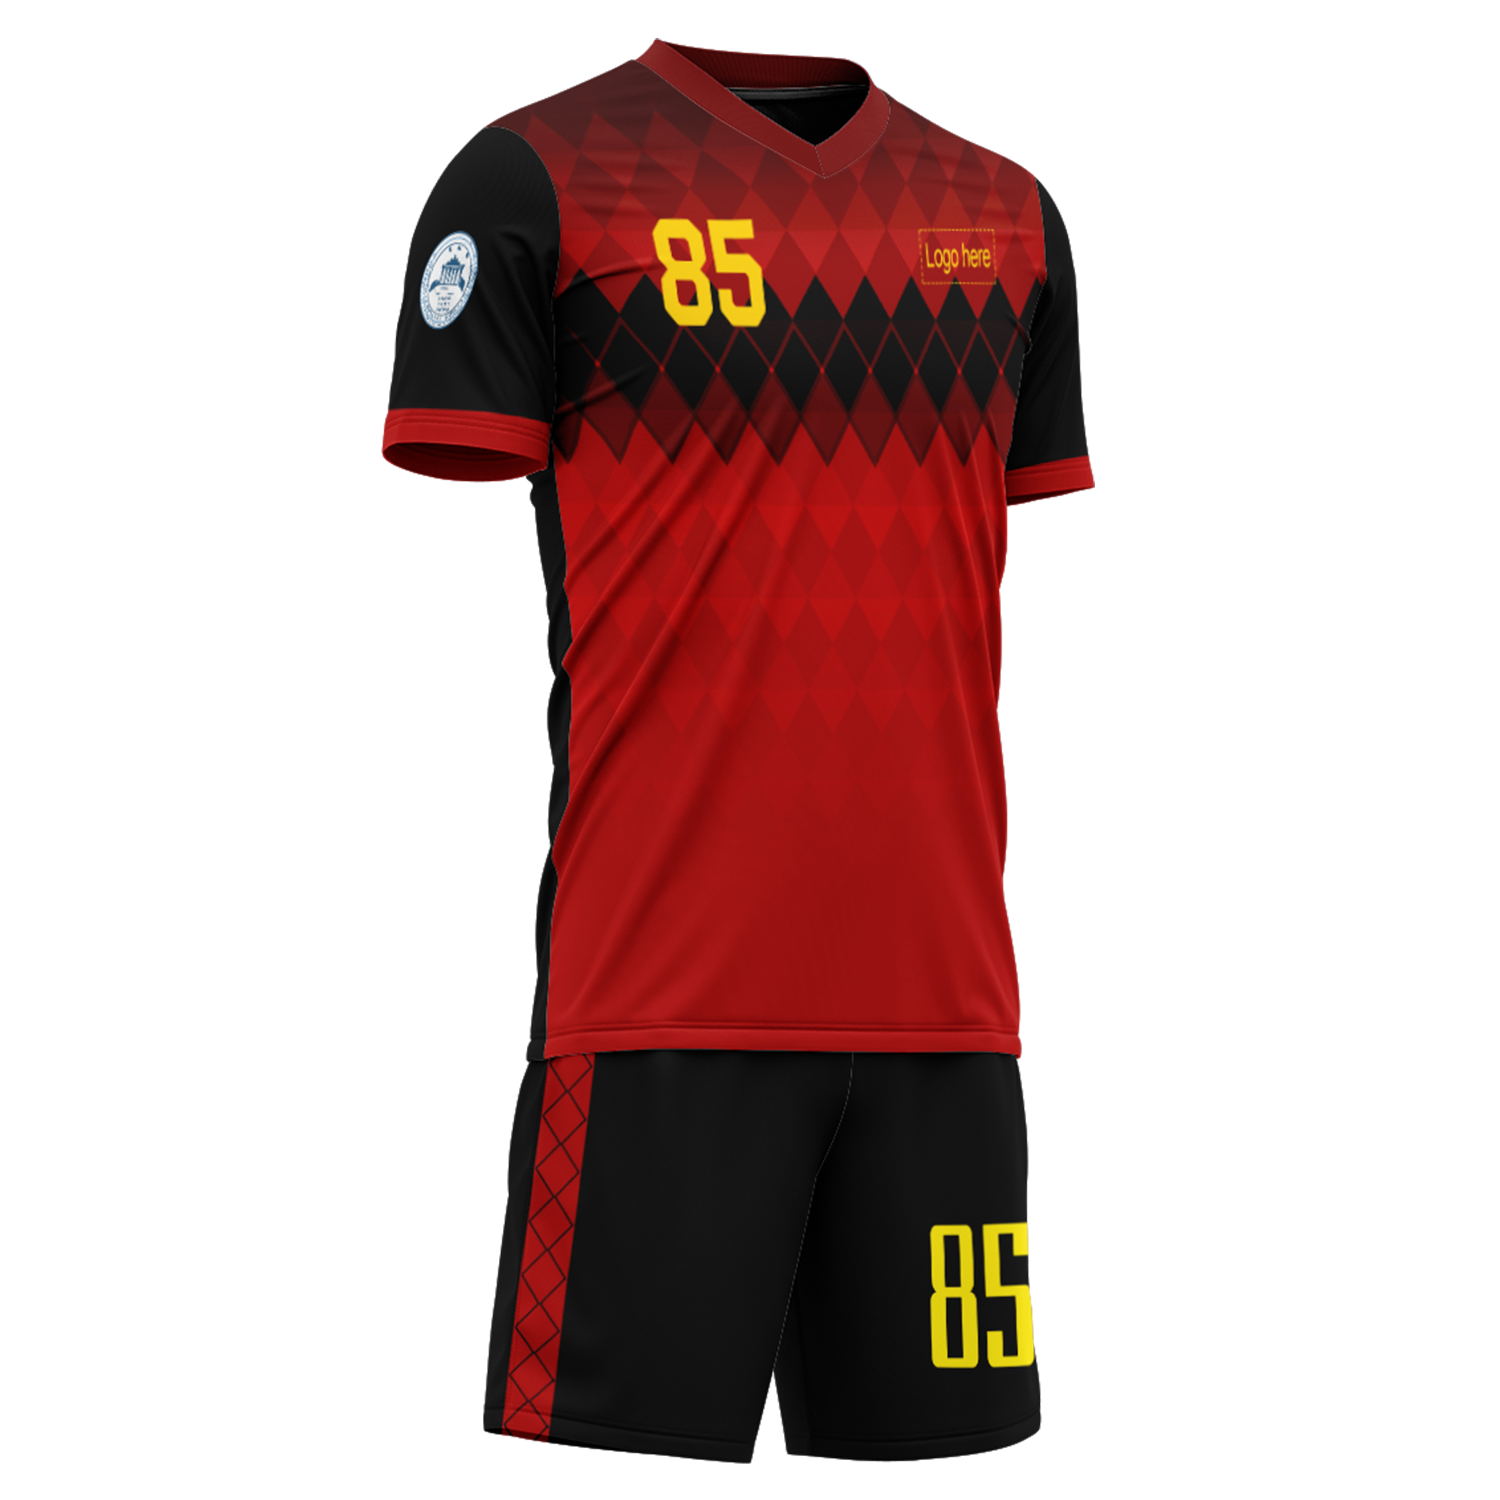 Custom Belgium Team Football Suits Personalized Design Print on Demand Soccer Jerseys